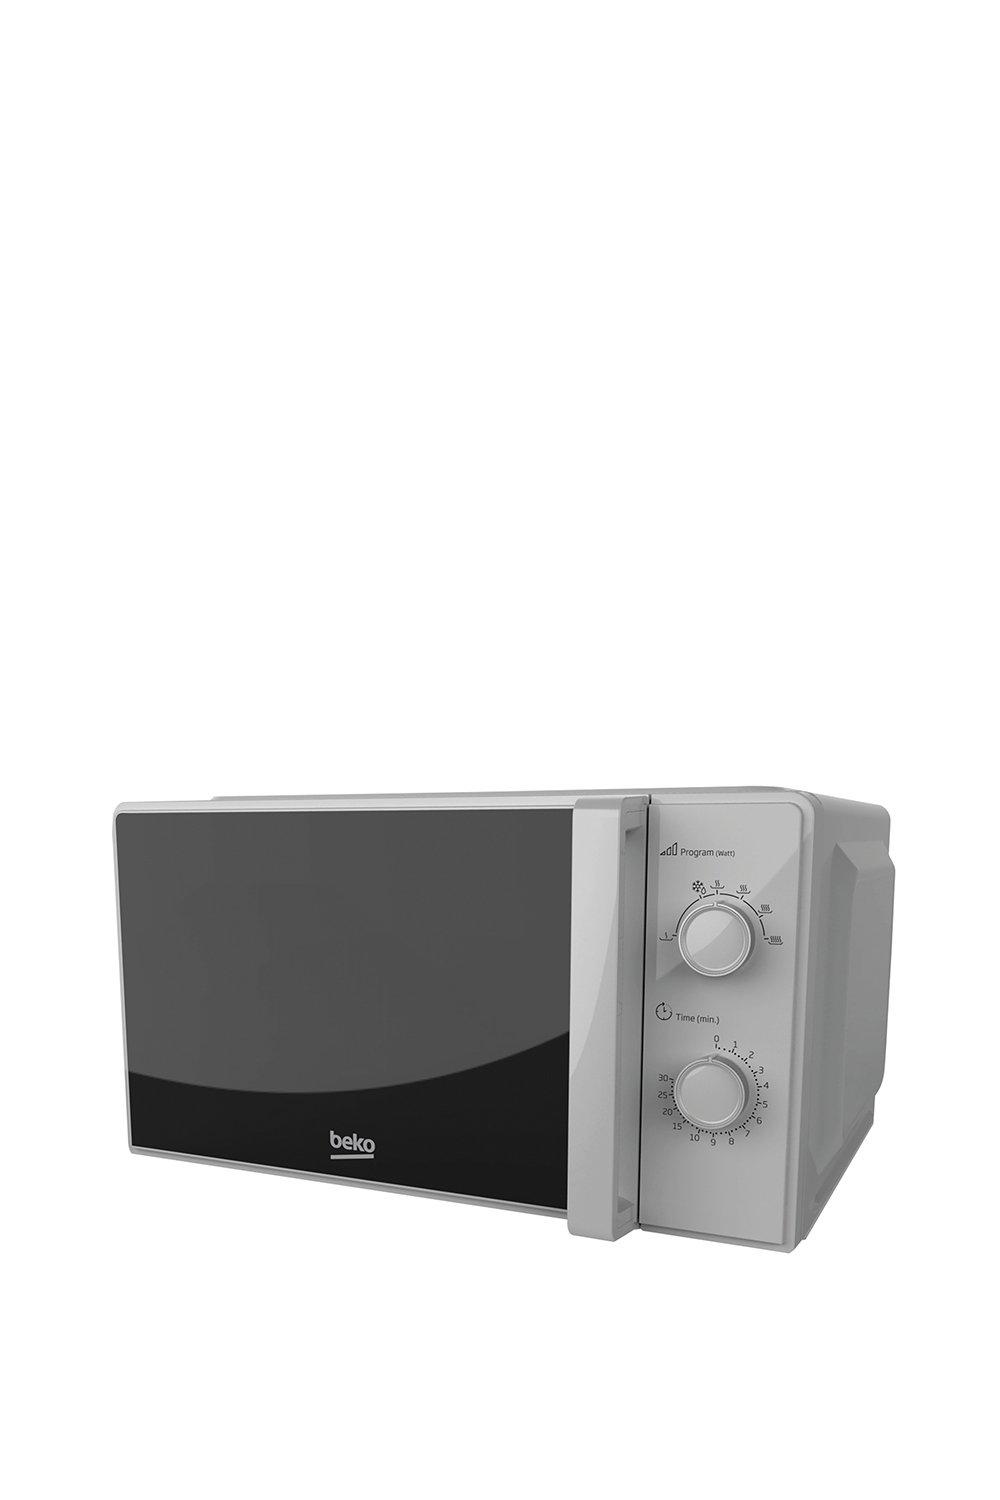 Beko 'Solo' Microwave 20 Litre